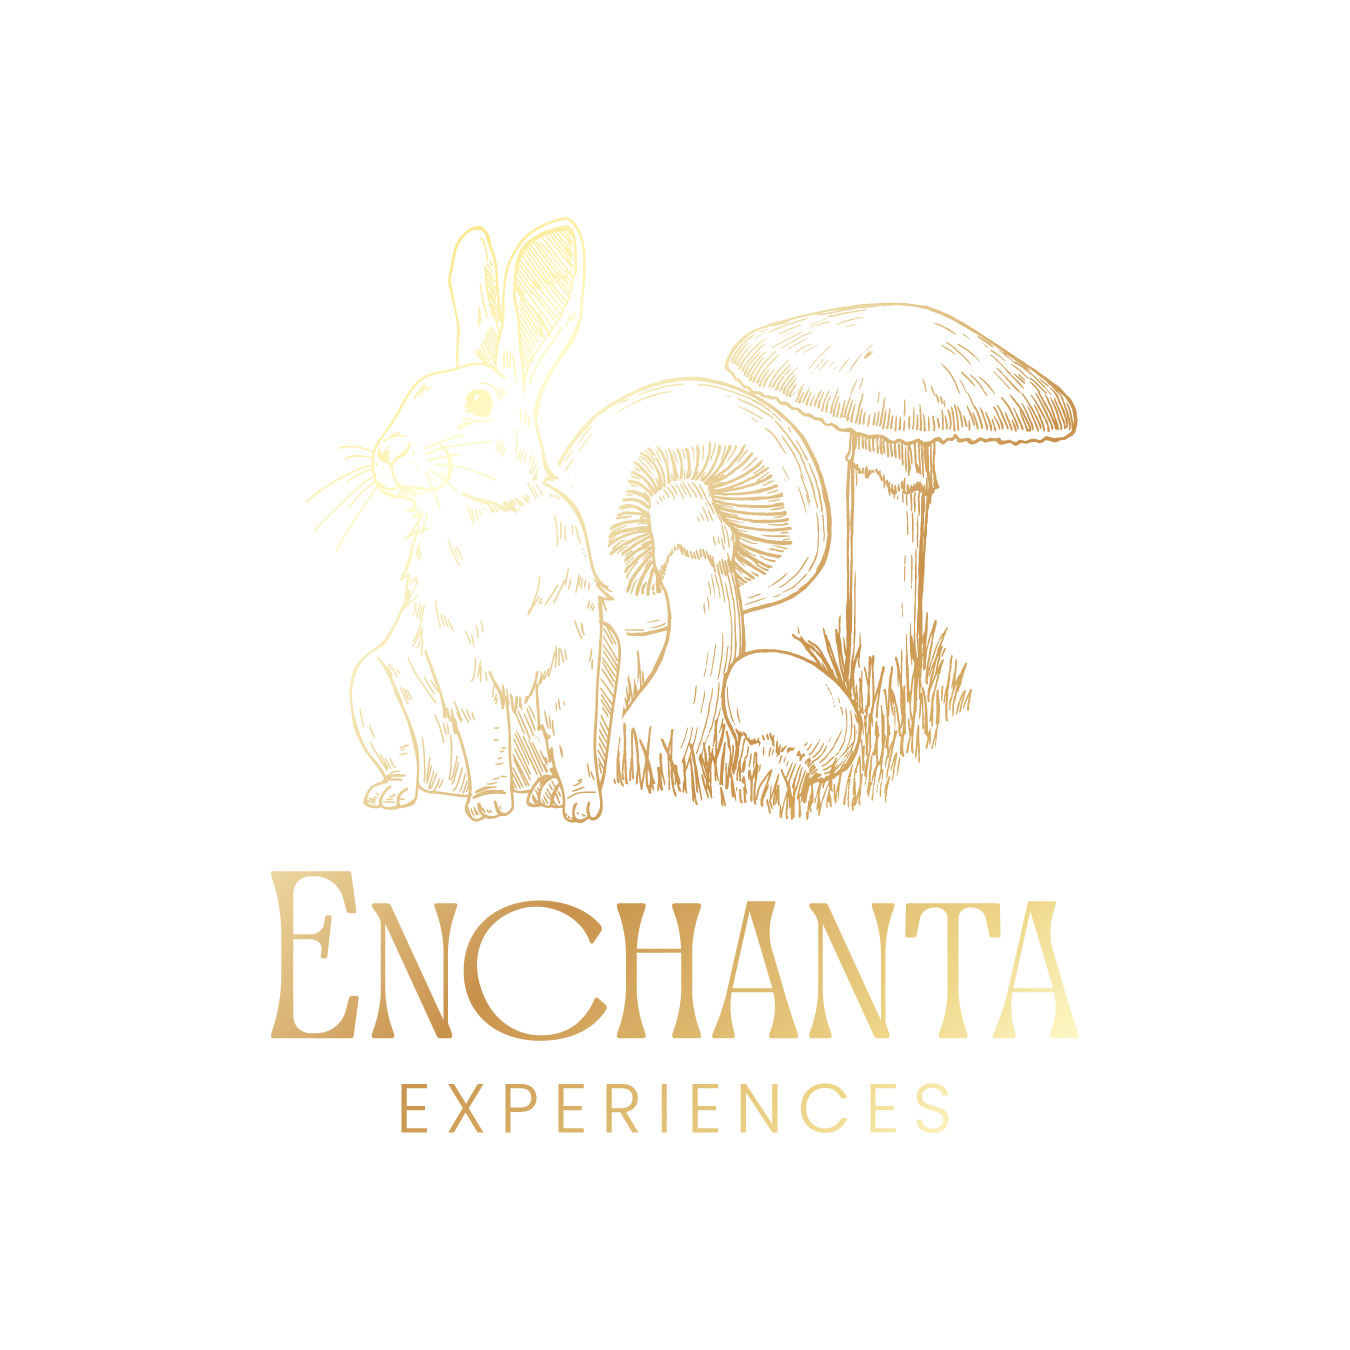 Enchanta Experiences